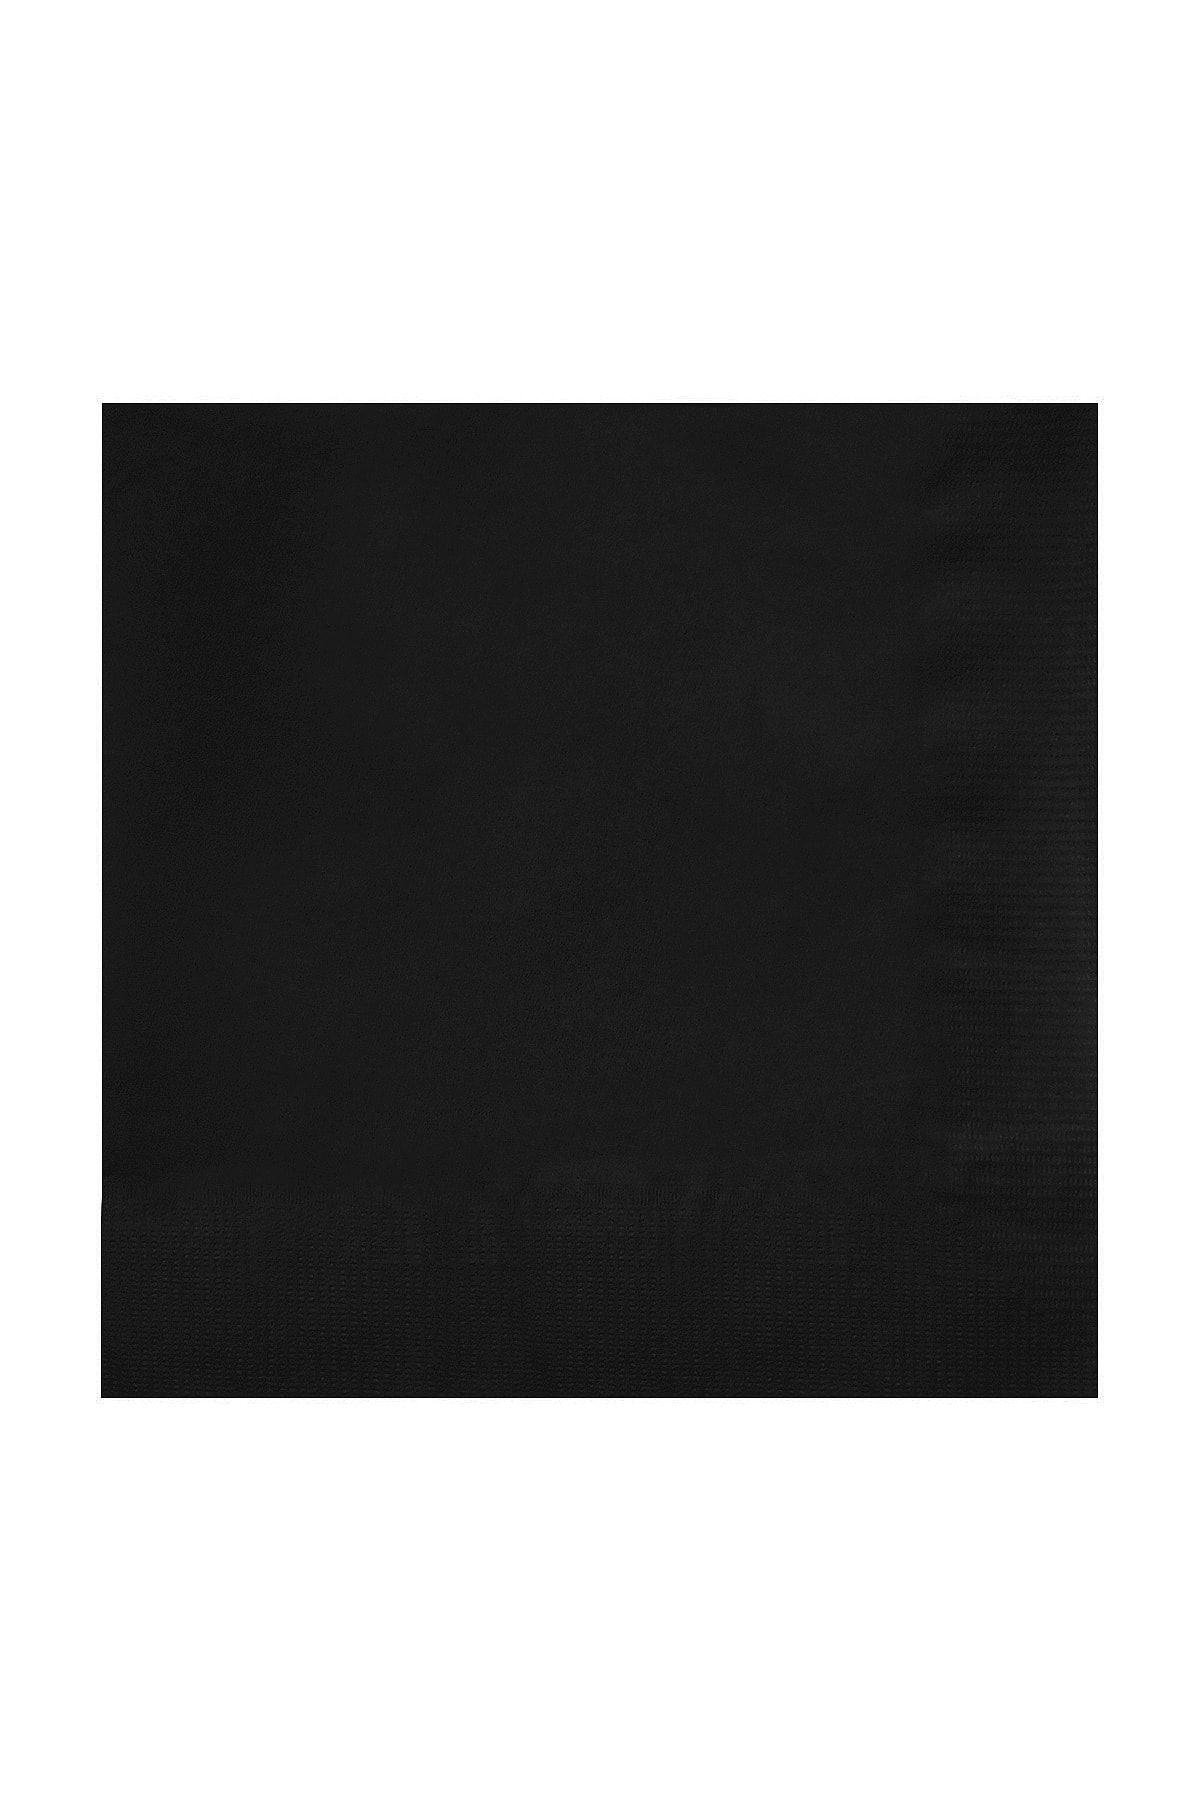 Story 33x33 cm 2 Katlı 20'li Desenli Siyah Renkli Peçete Sr-3348